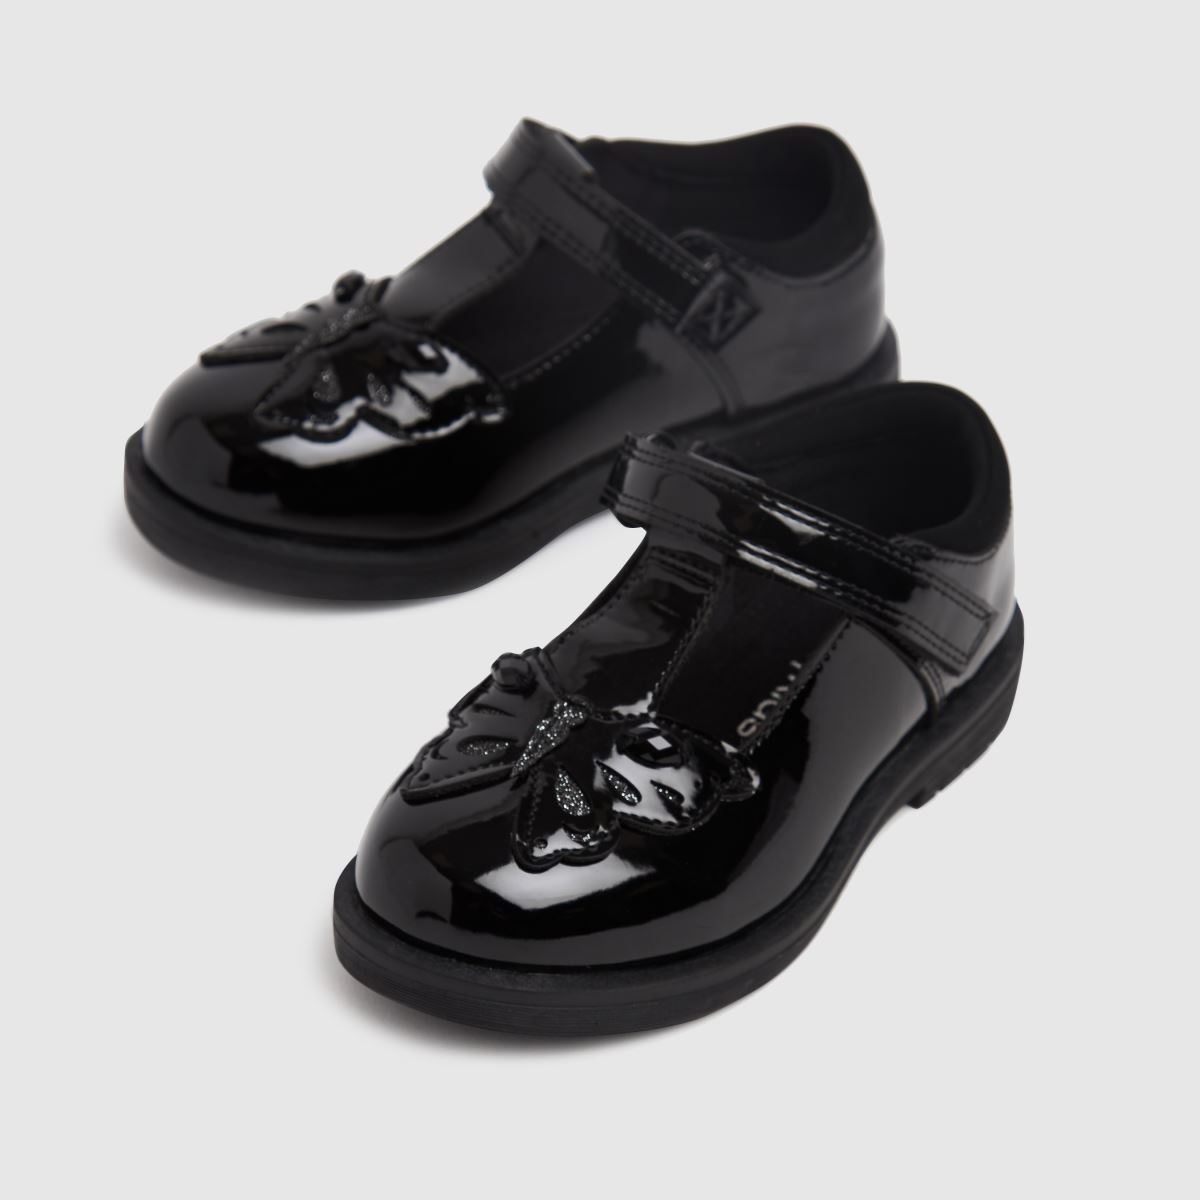 Girls school shoes black bow sizes 10-2 